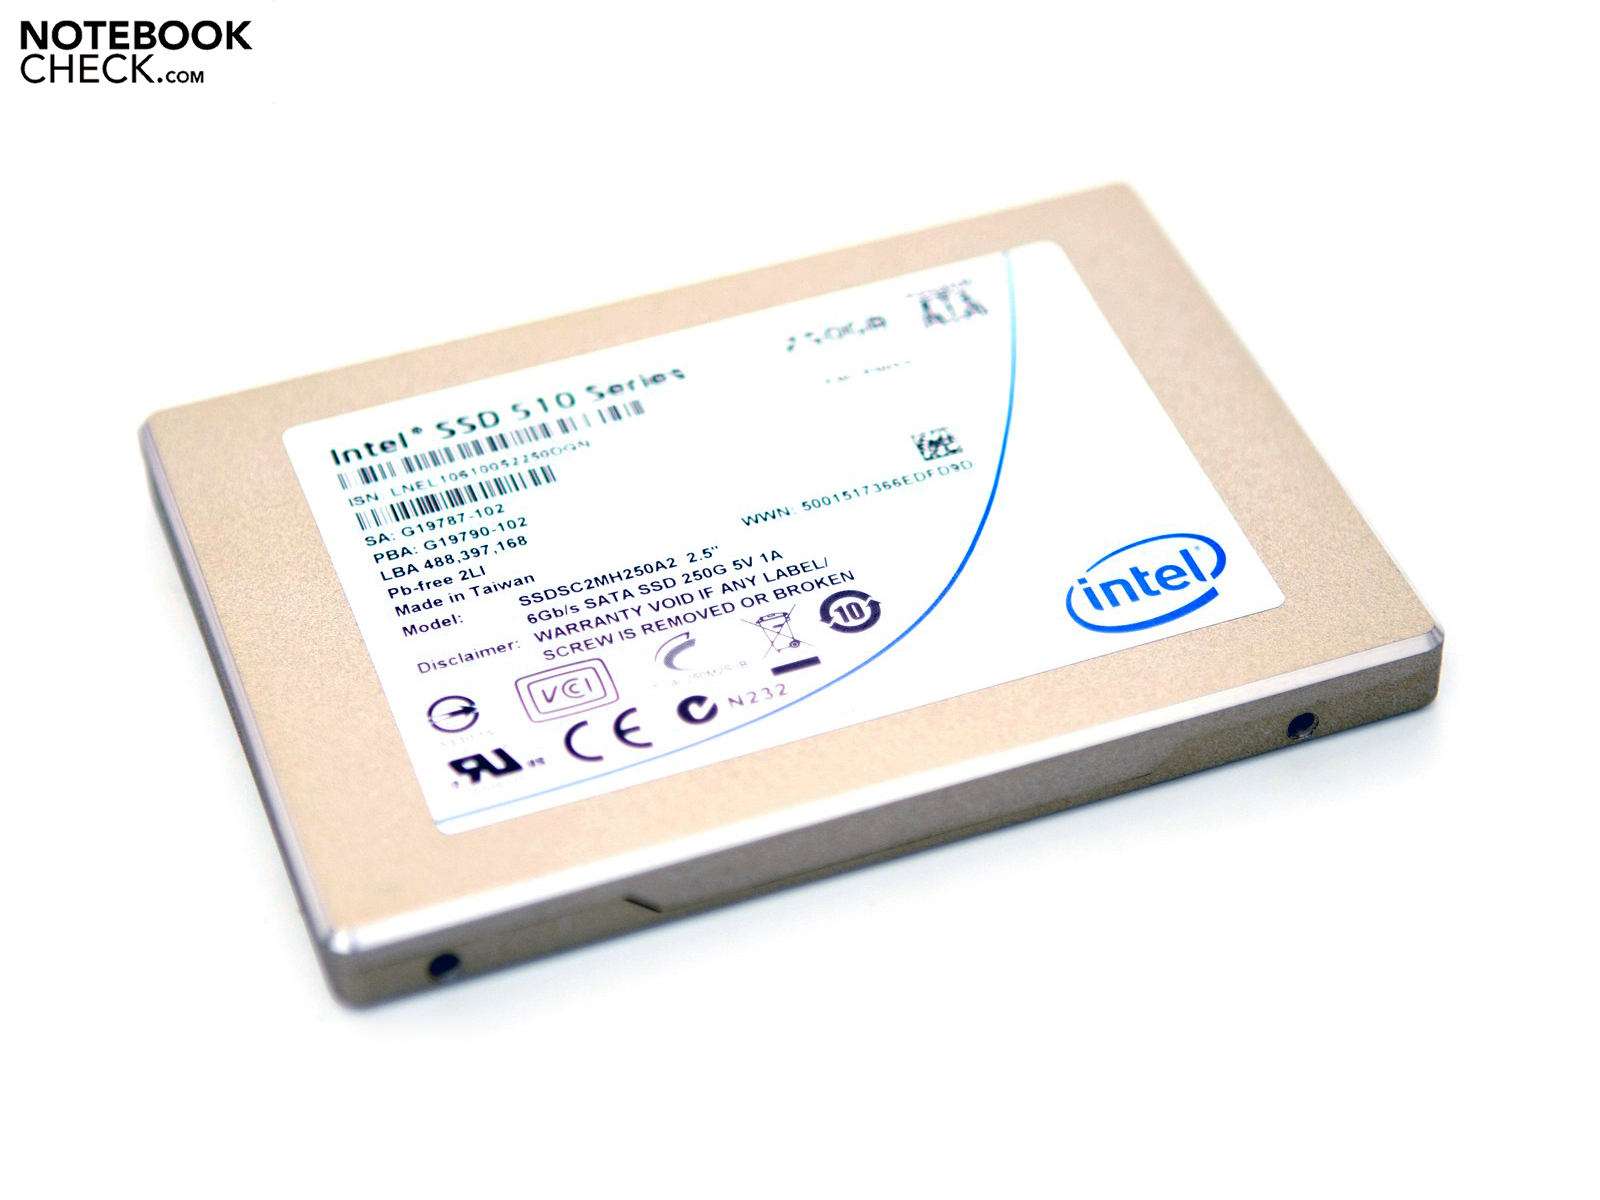 Intel SSD 510 Review (250GB) 